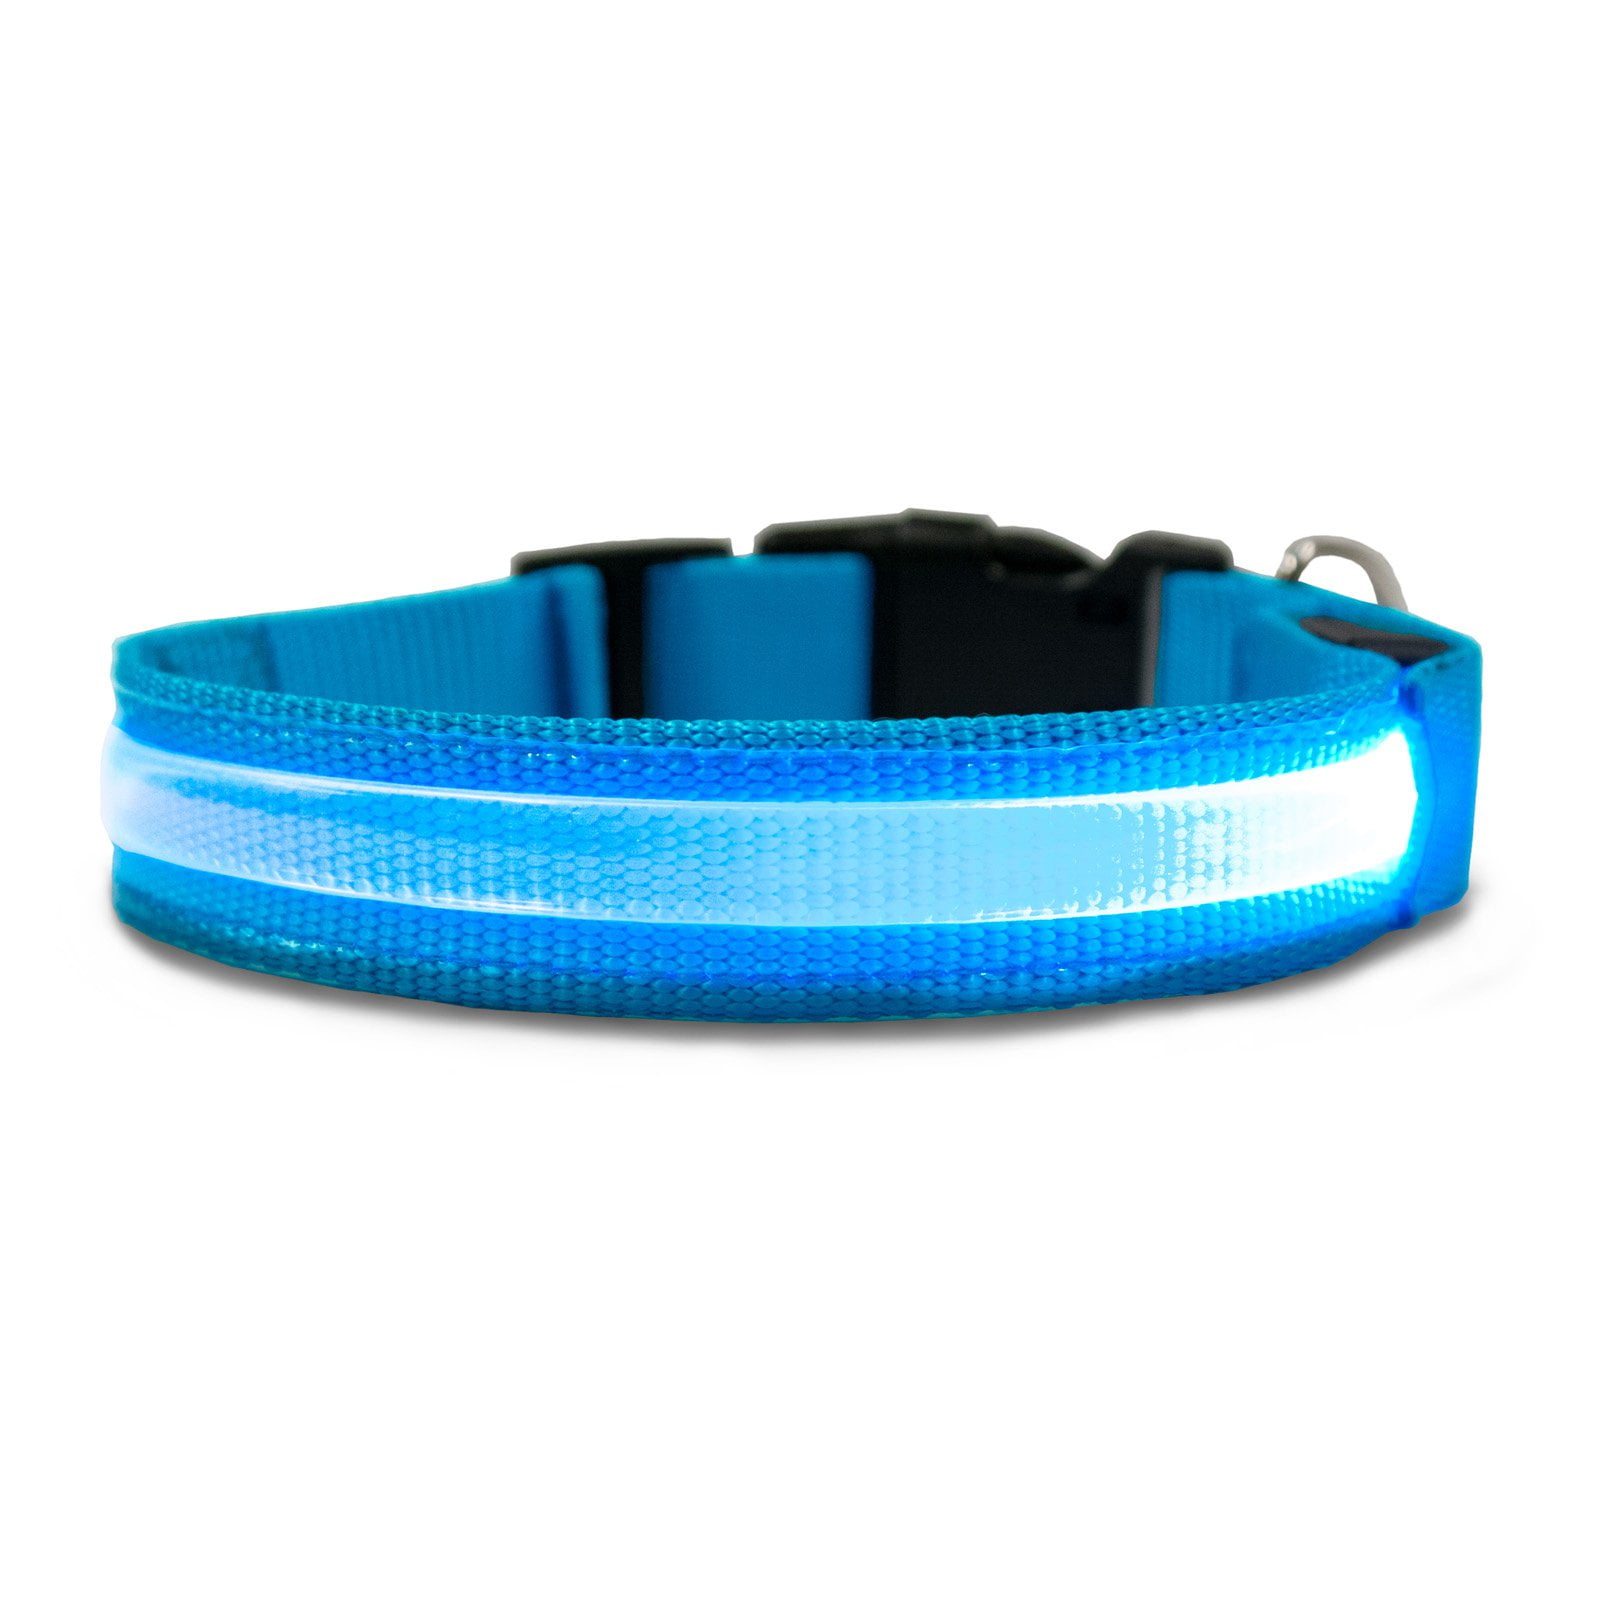 FurHaven LED Safety Pet Collar